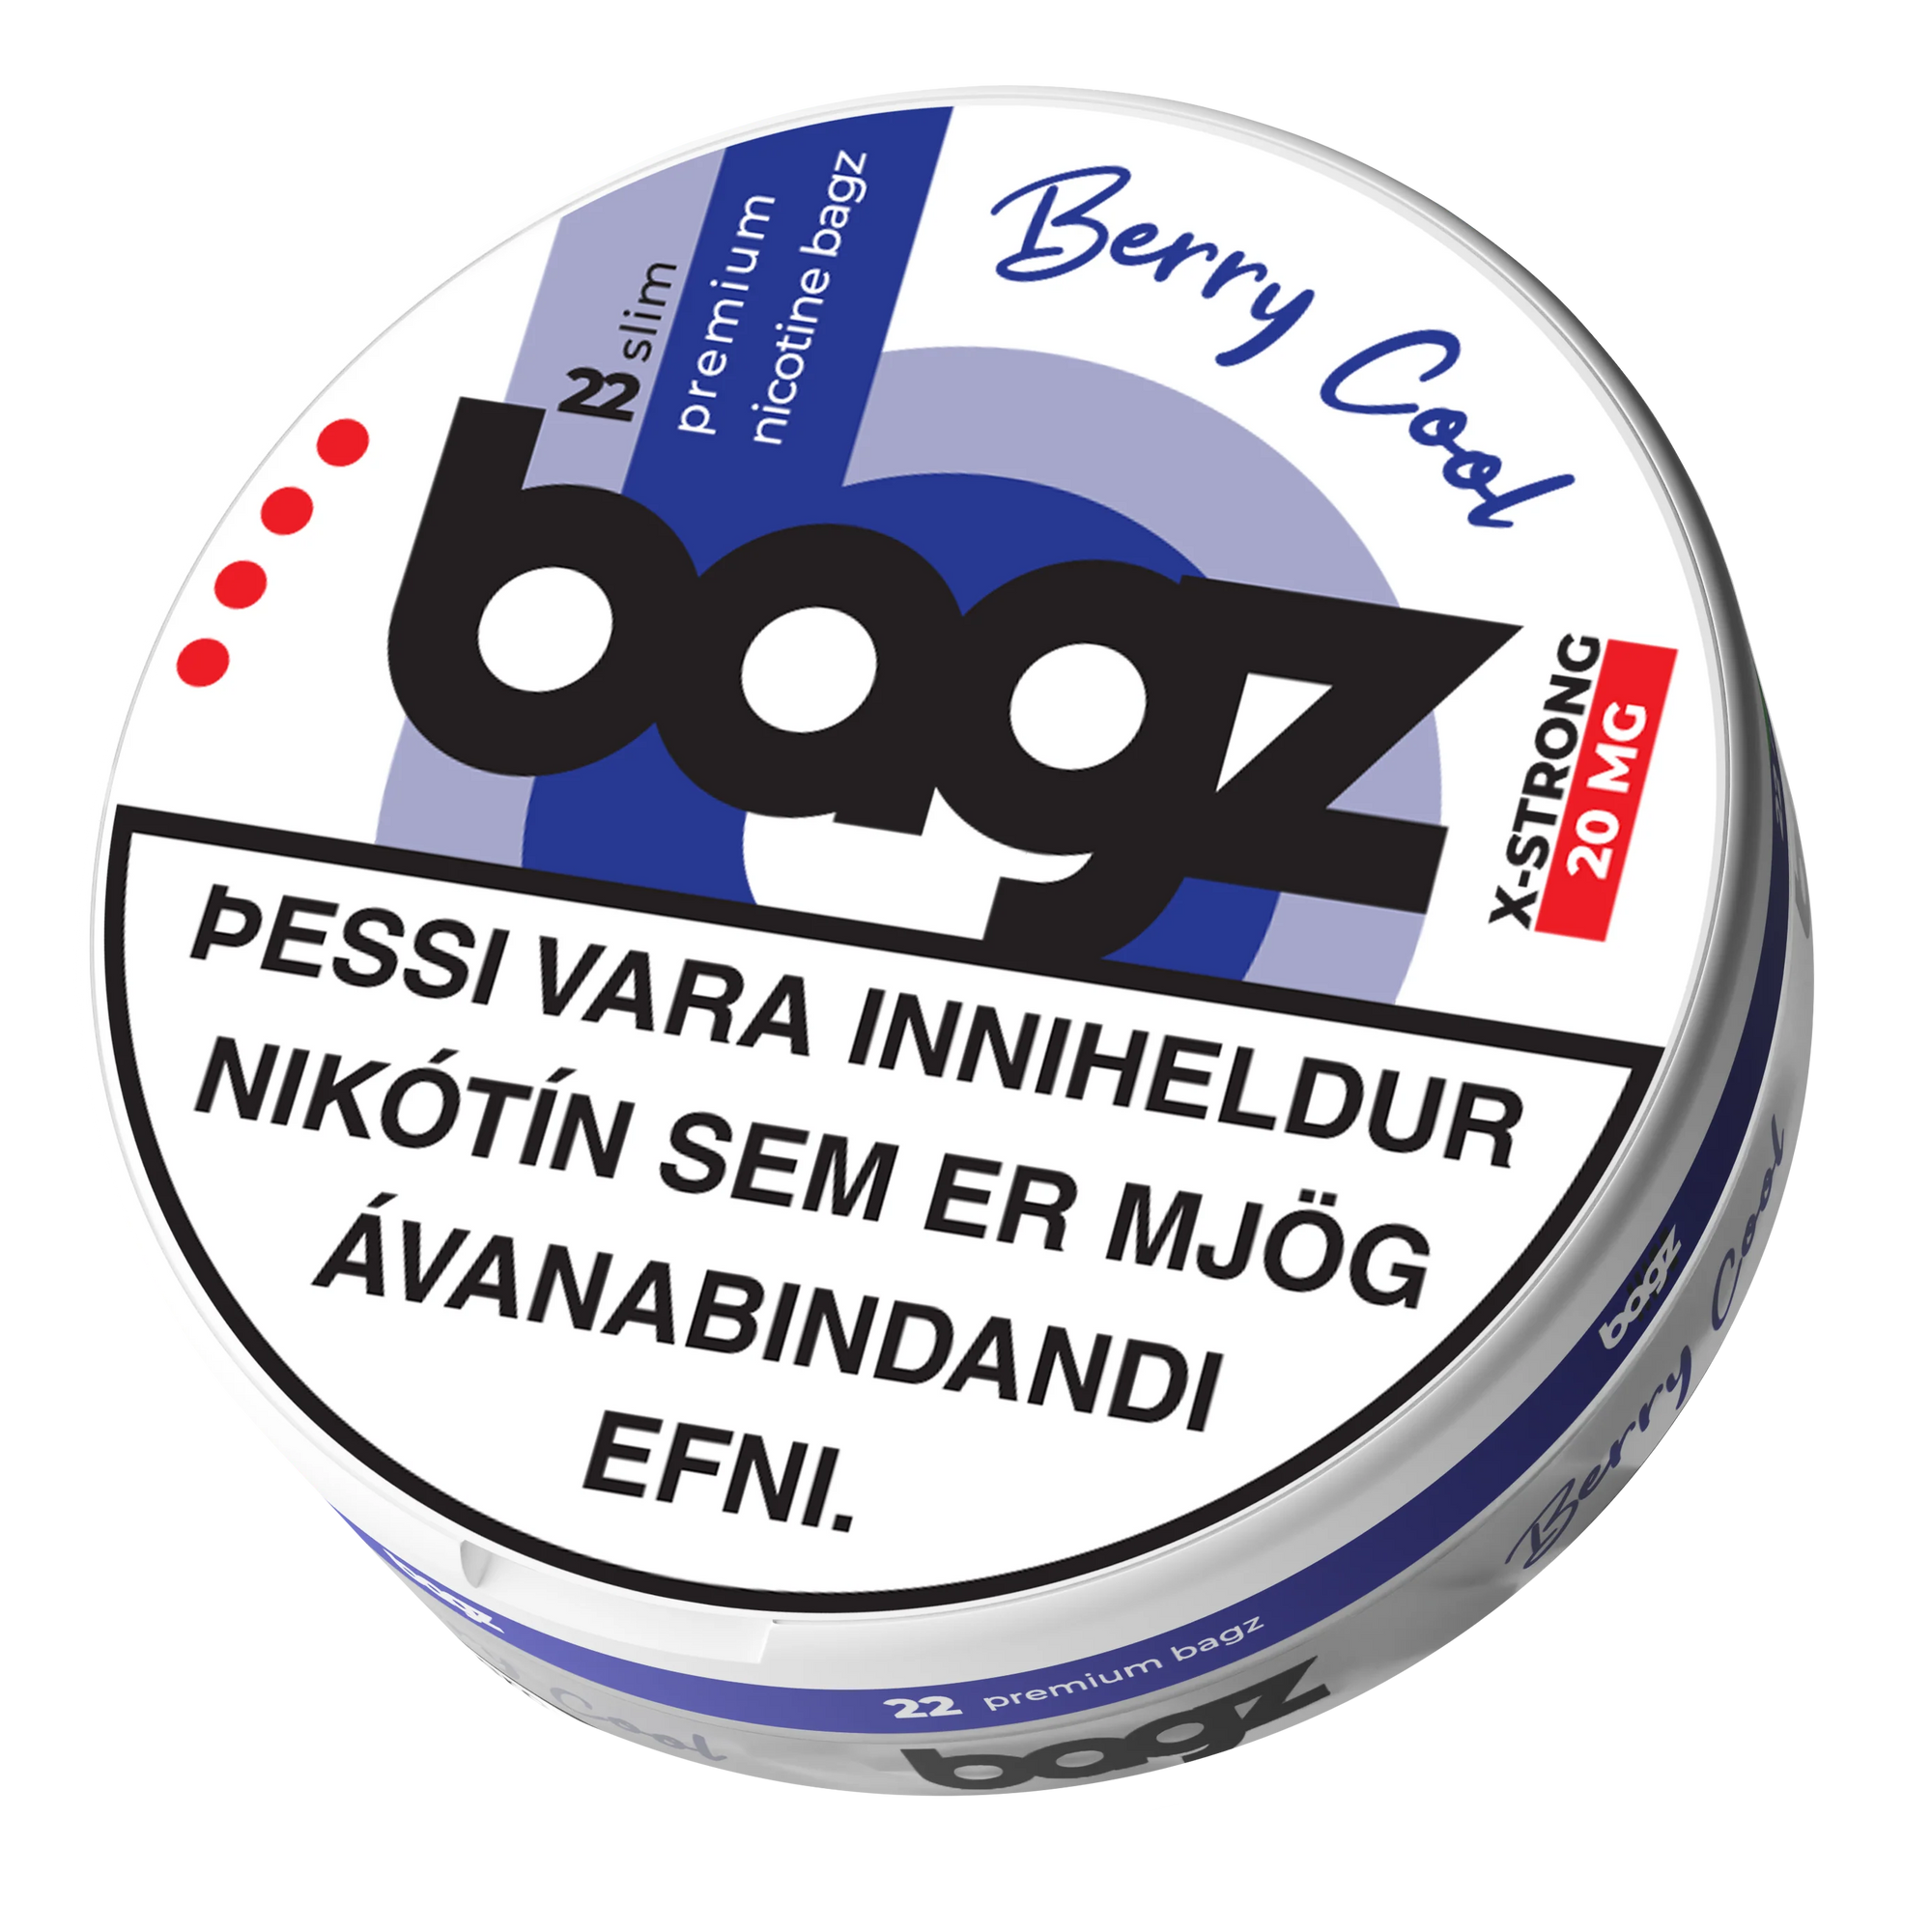 BAGZ - Berry Cool 20mg - Nammi.net